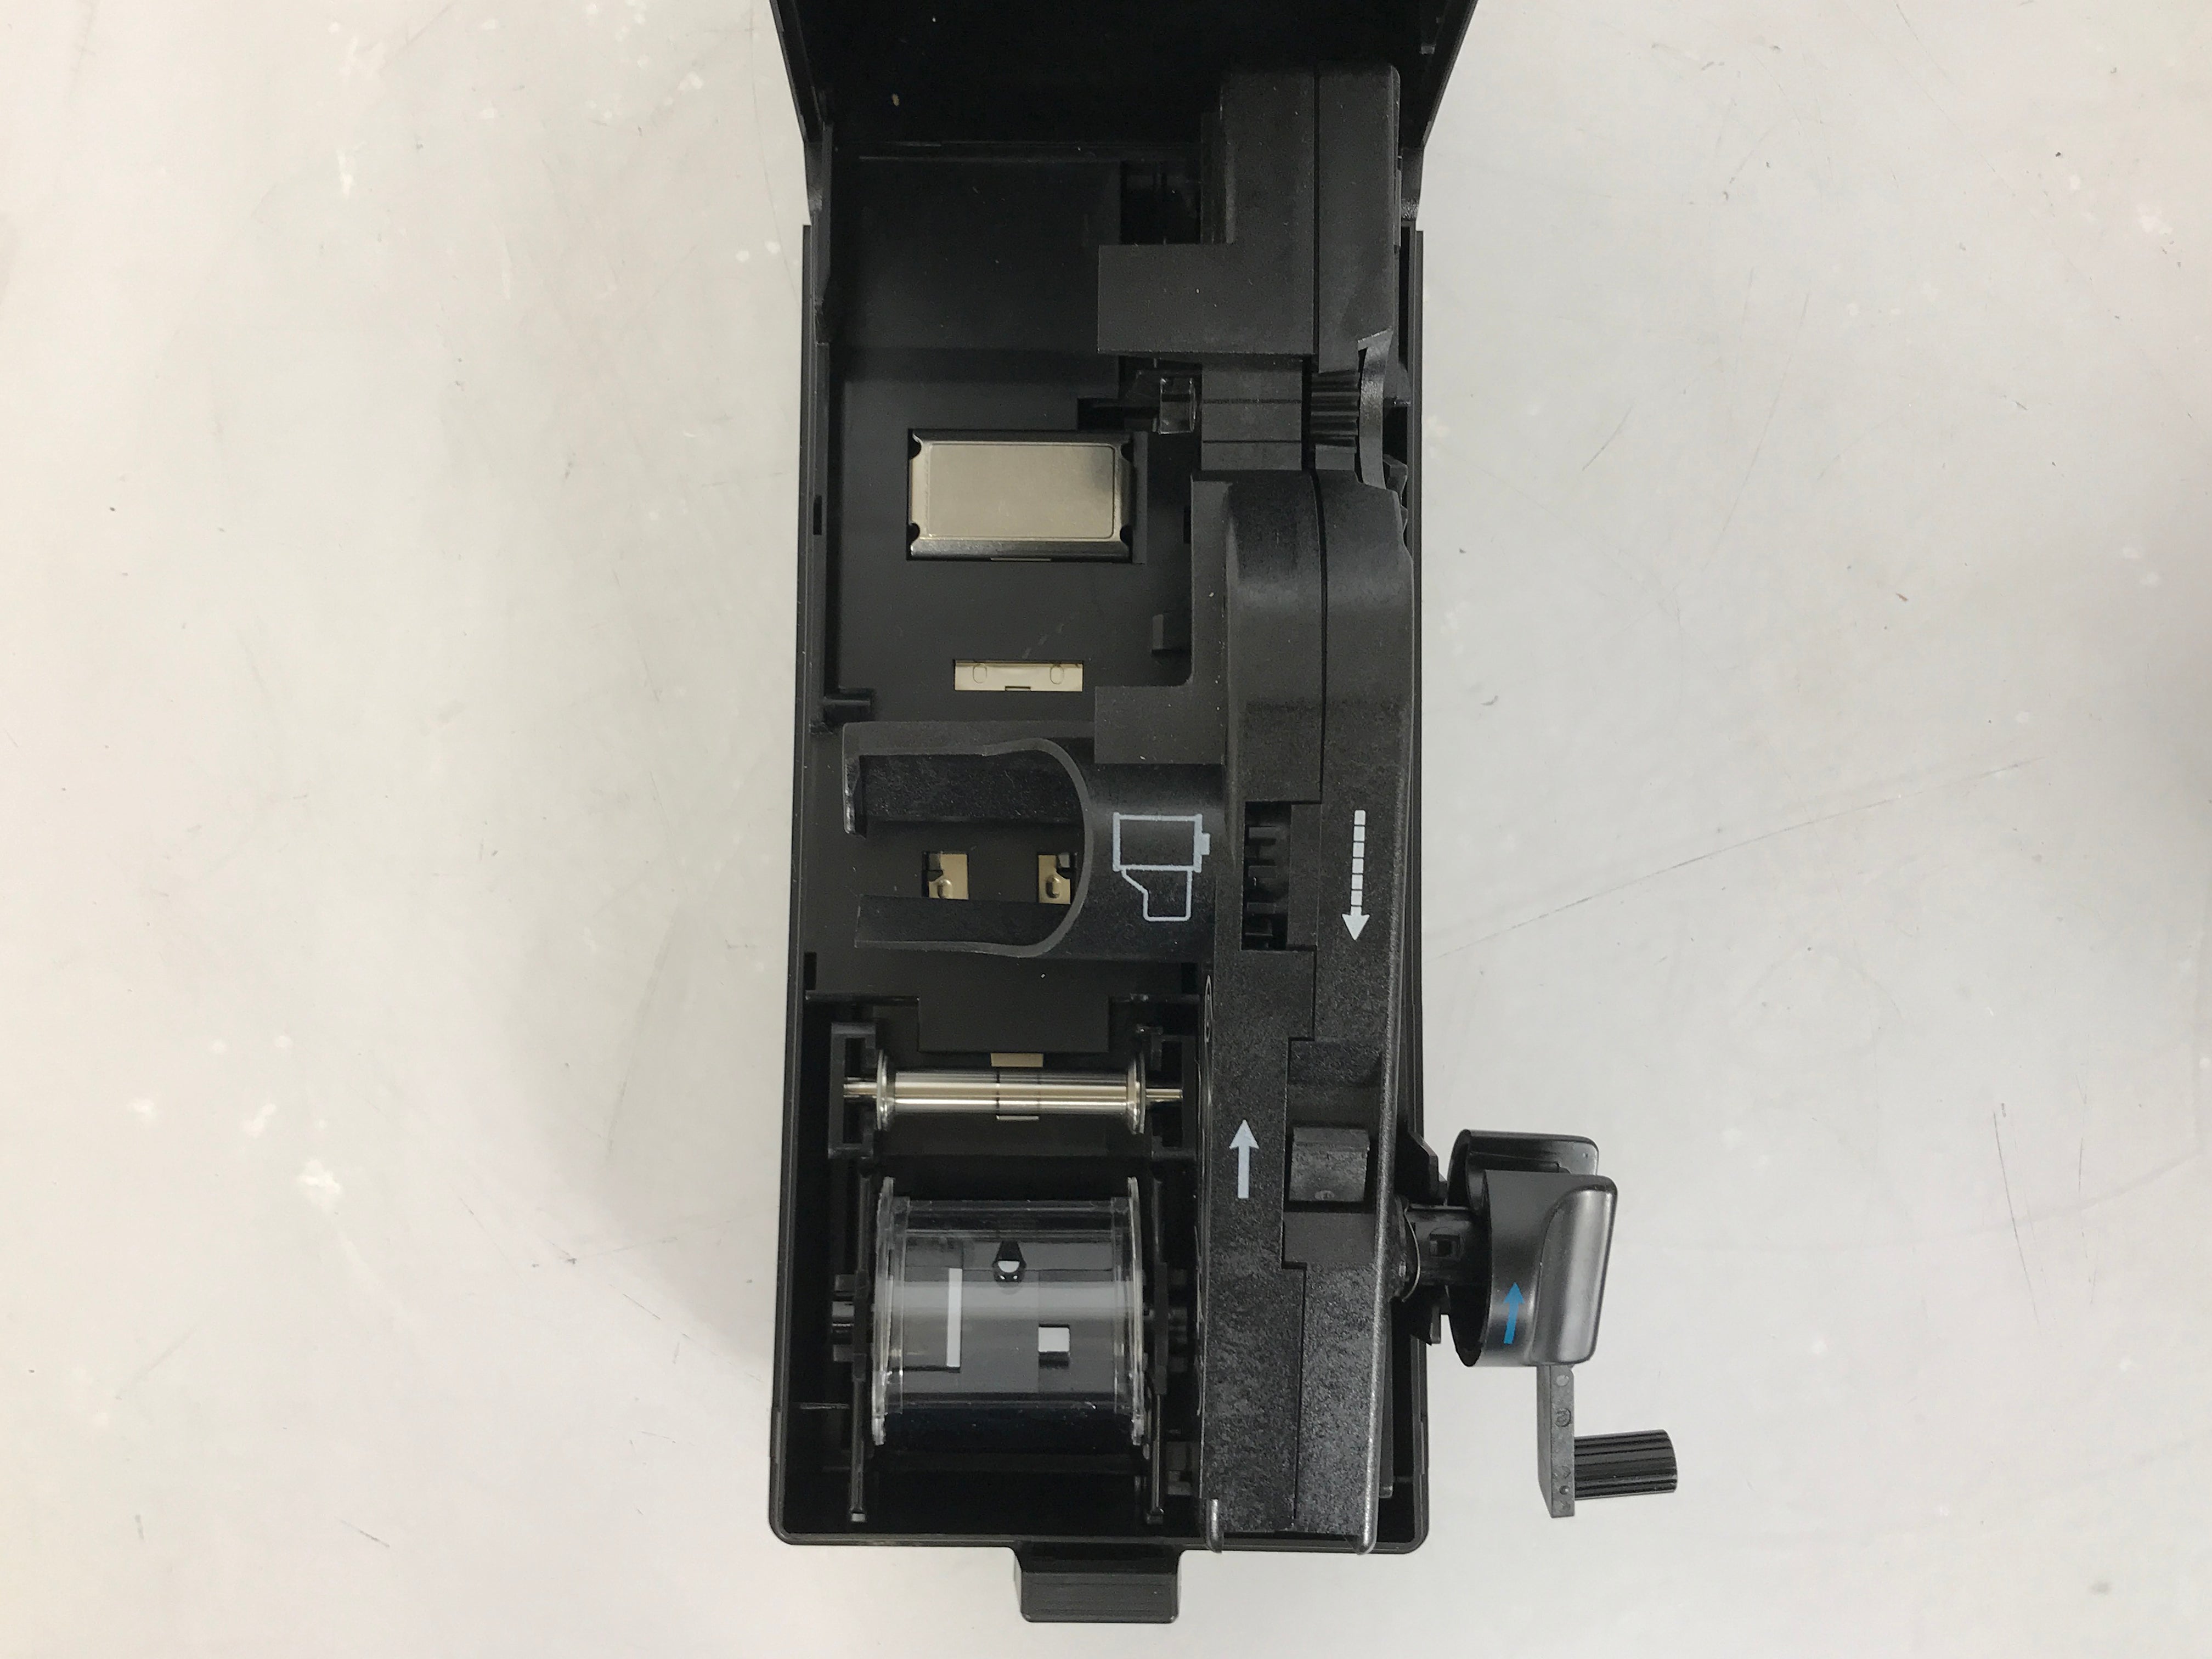 Polaroid AutoProcessor 35mm #2